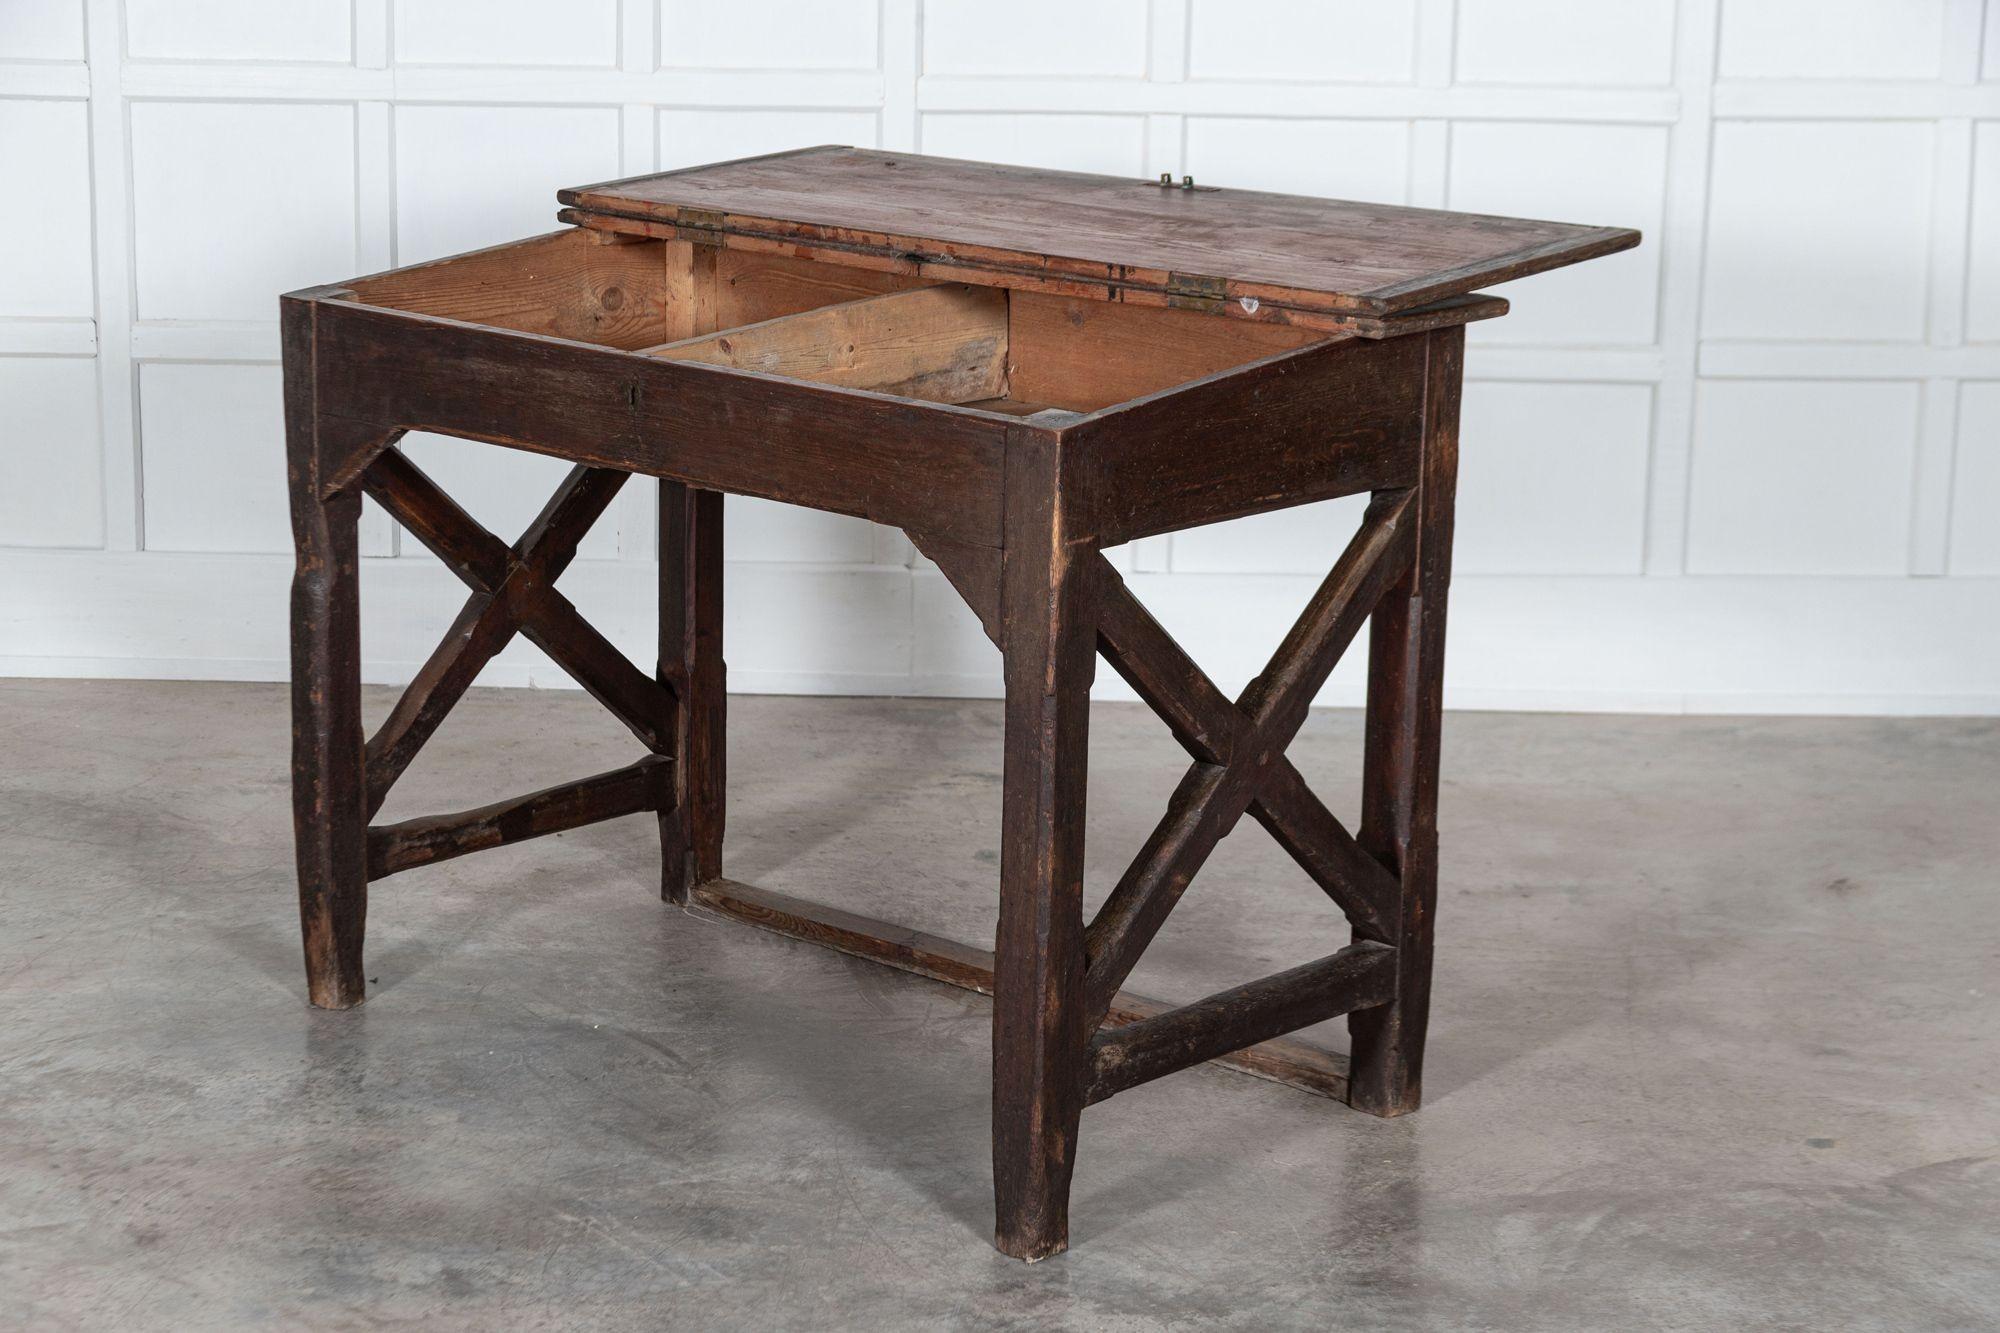 circa 1870
19th century English pine clerks desk.
Measures: W128 x D74 x H93 cm.
 